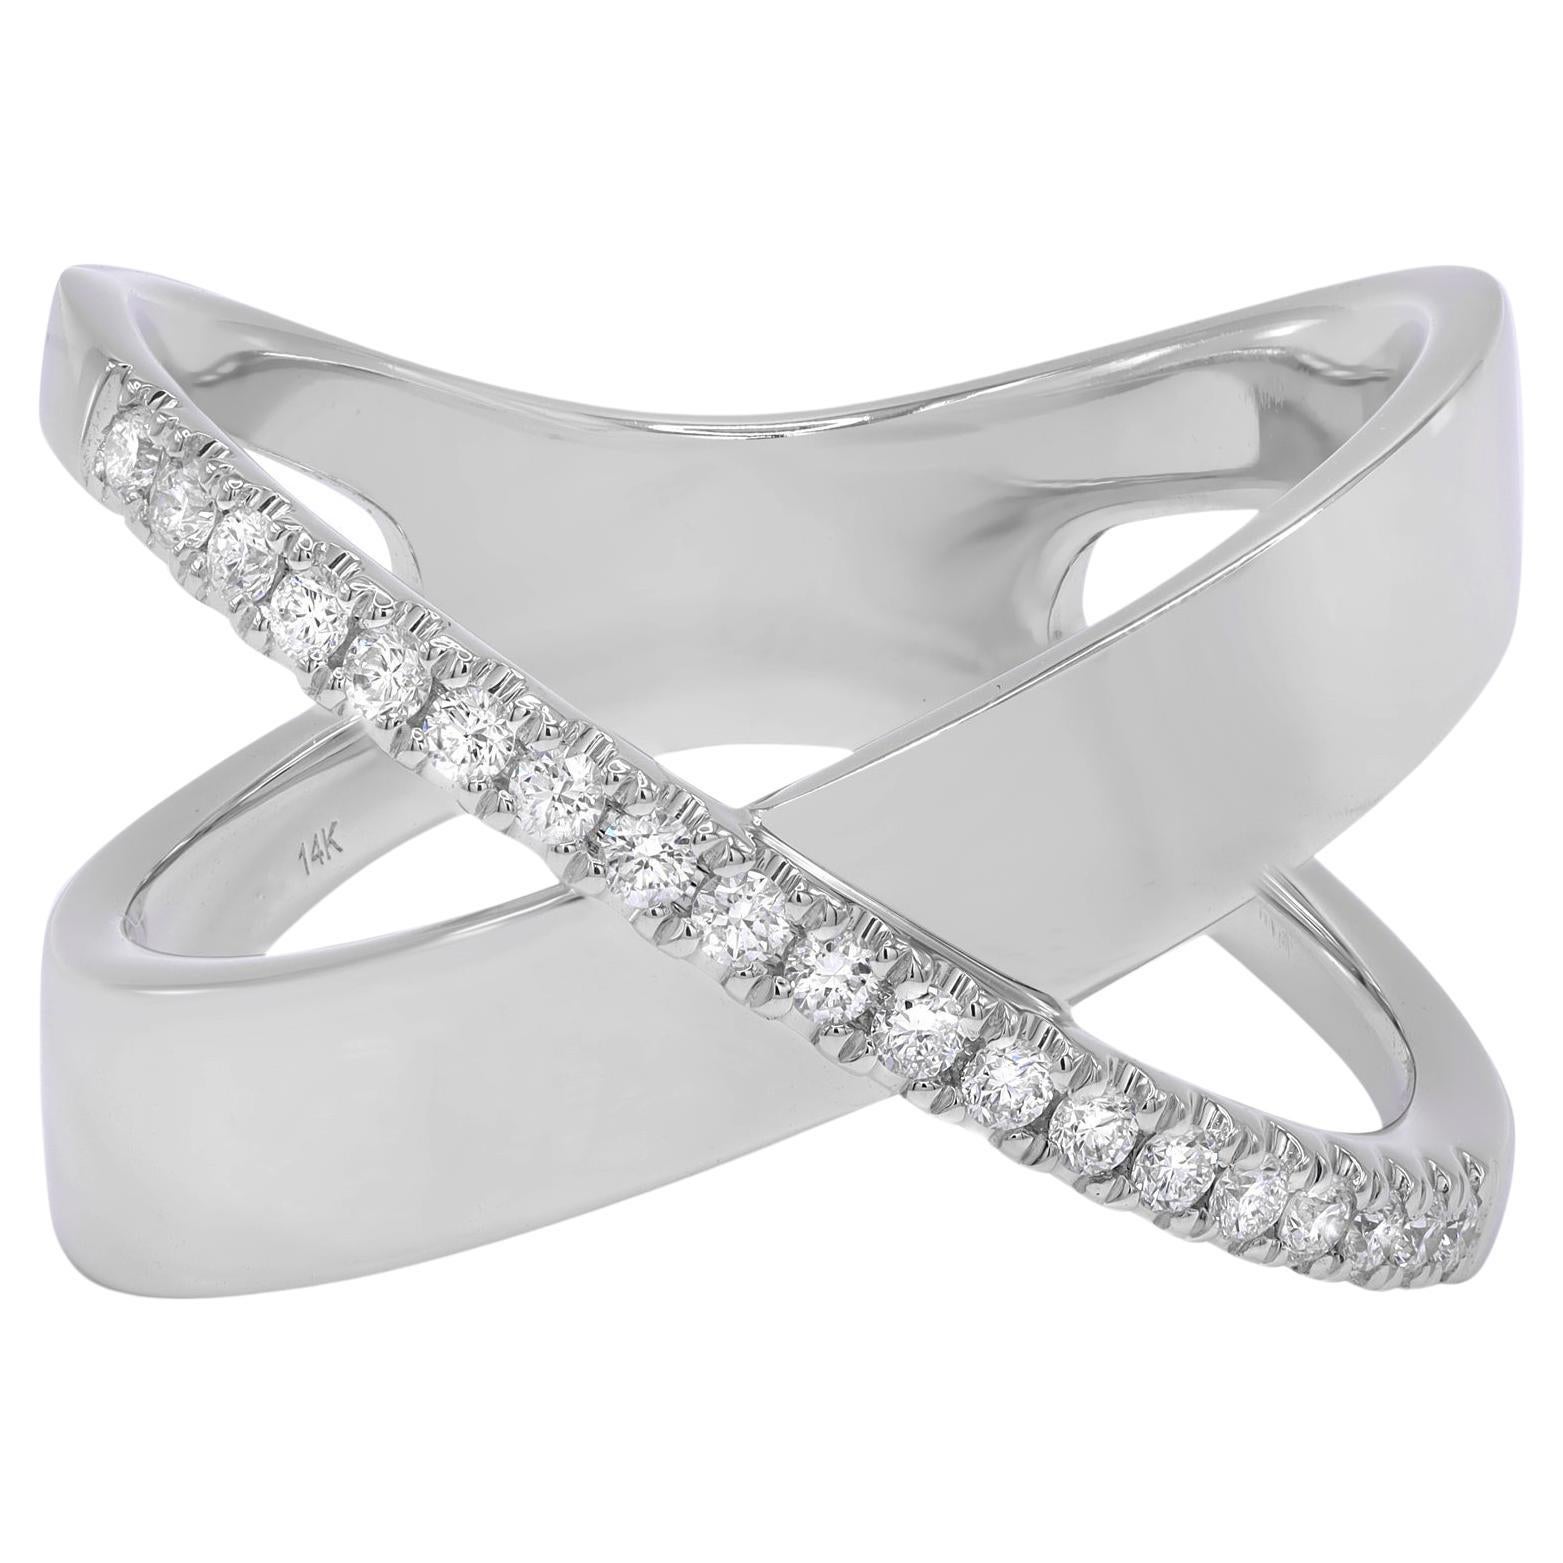 Rachel Koen Pave Diamond X Ring Band 14K White Gold 0.19Cttw Size 7